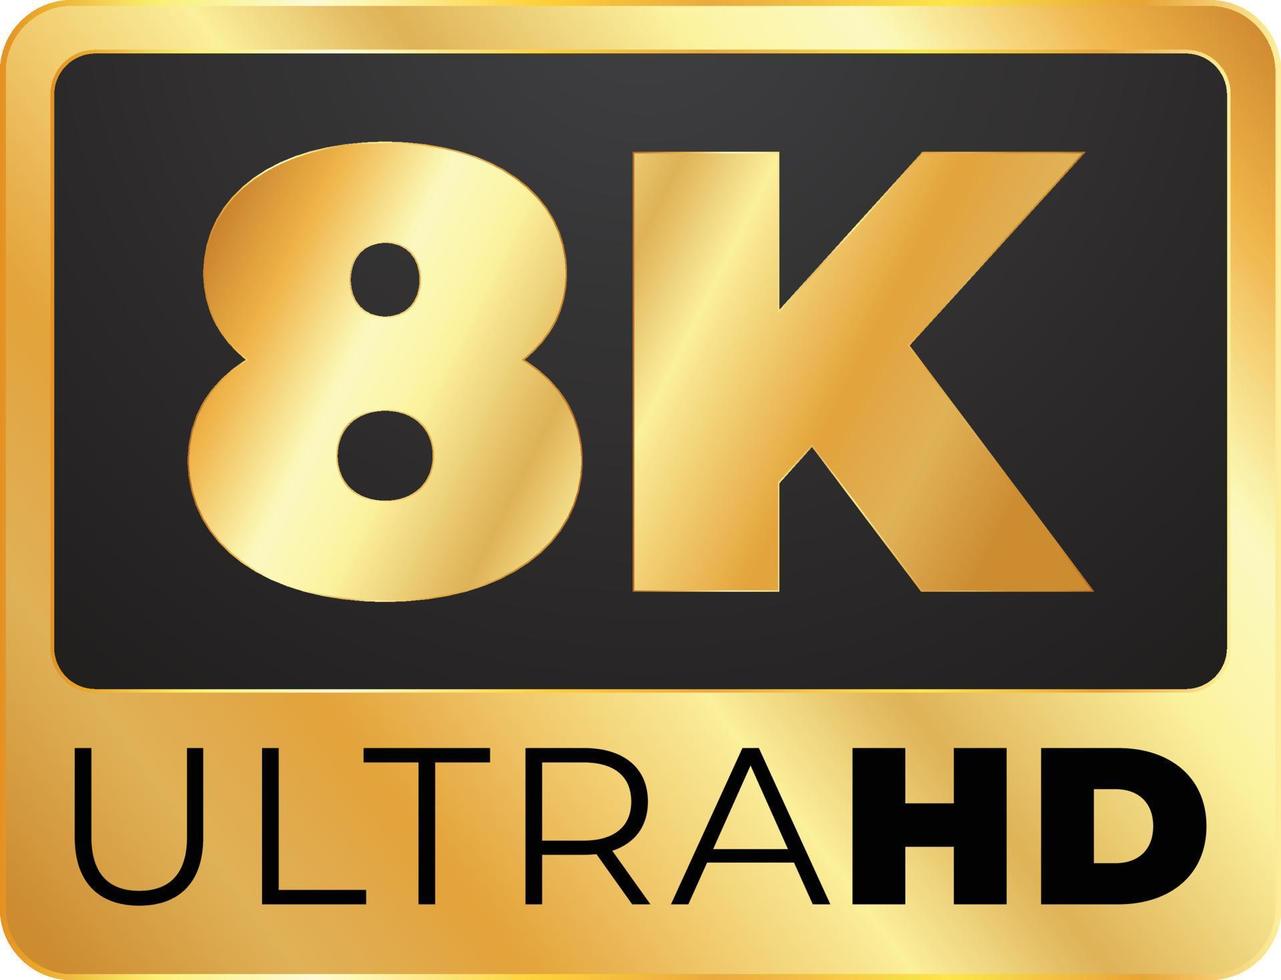 8K Resolution Ultra Hd Logo, 8k high definition vector illustration, 8k ultra hd golden label